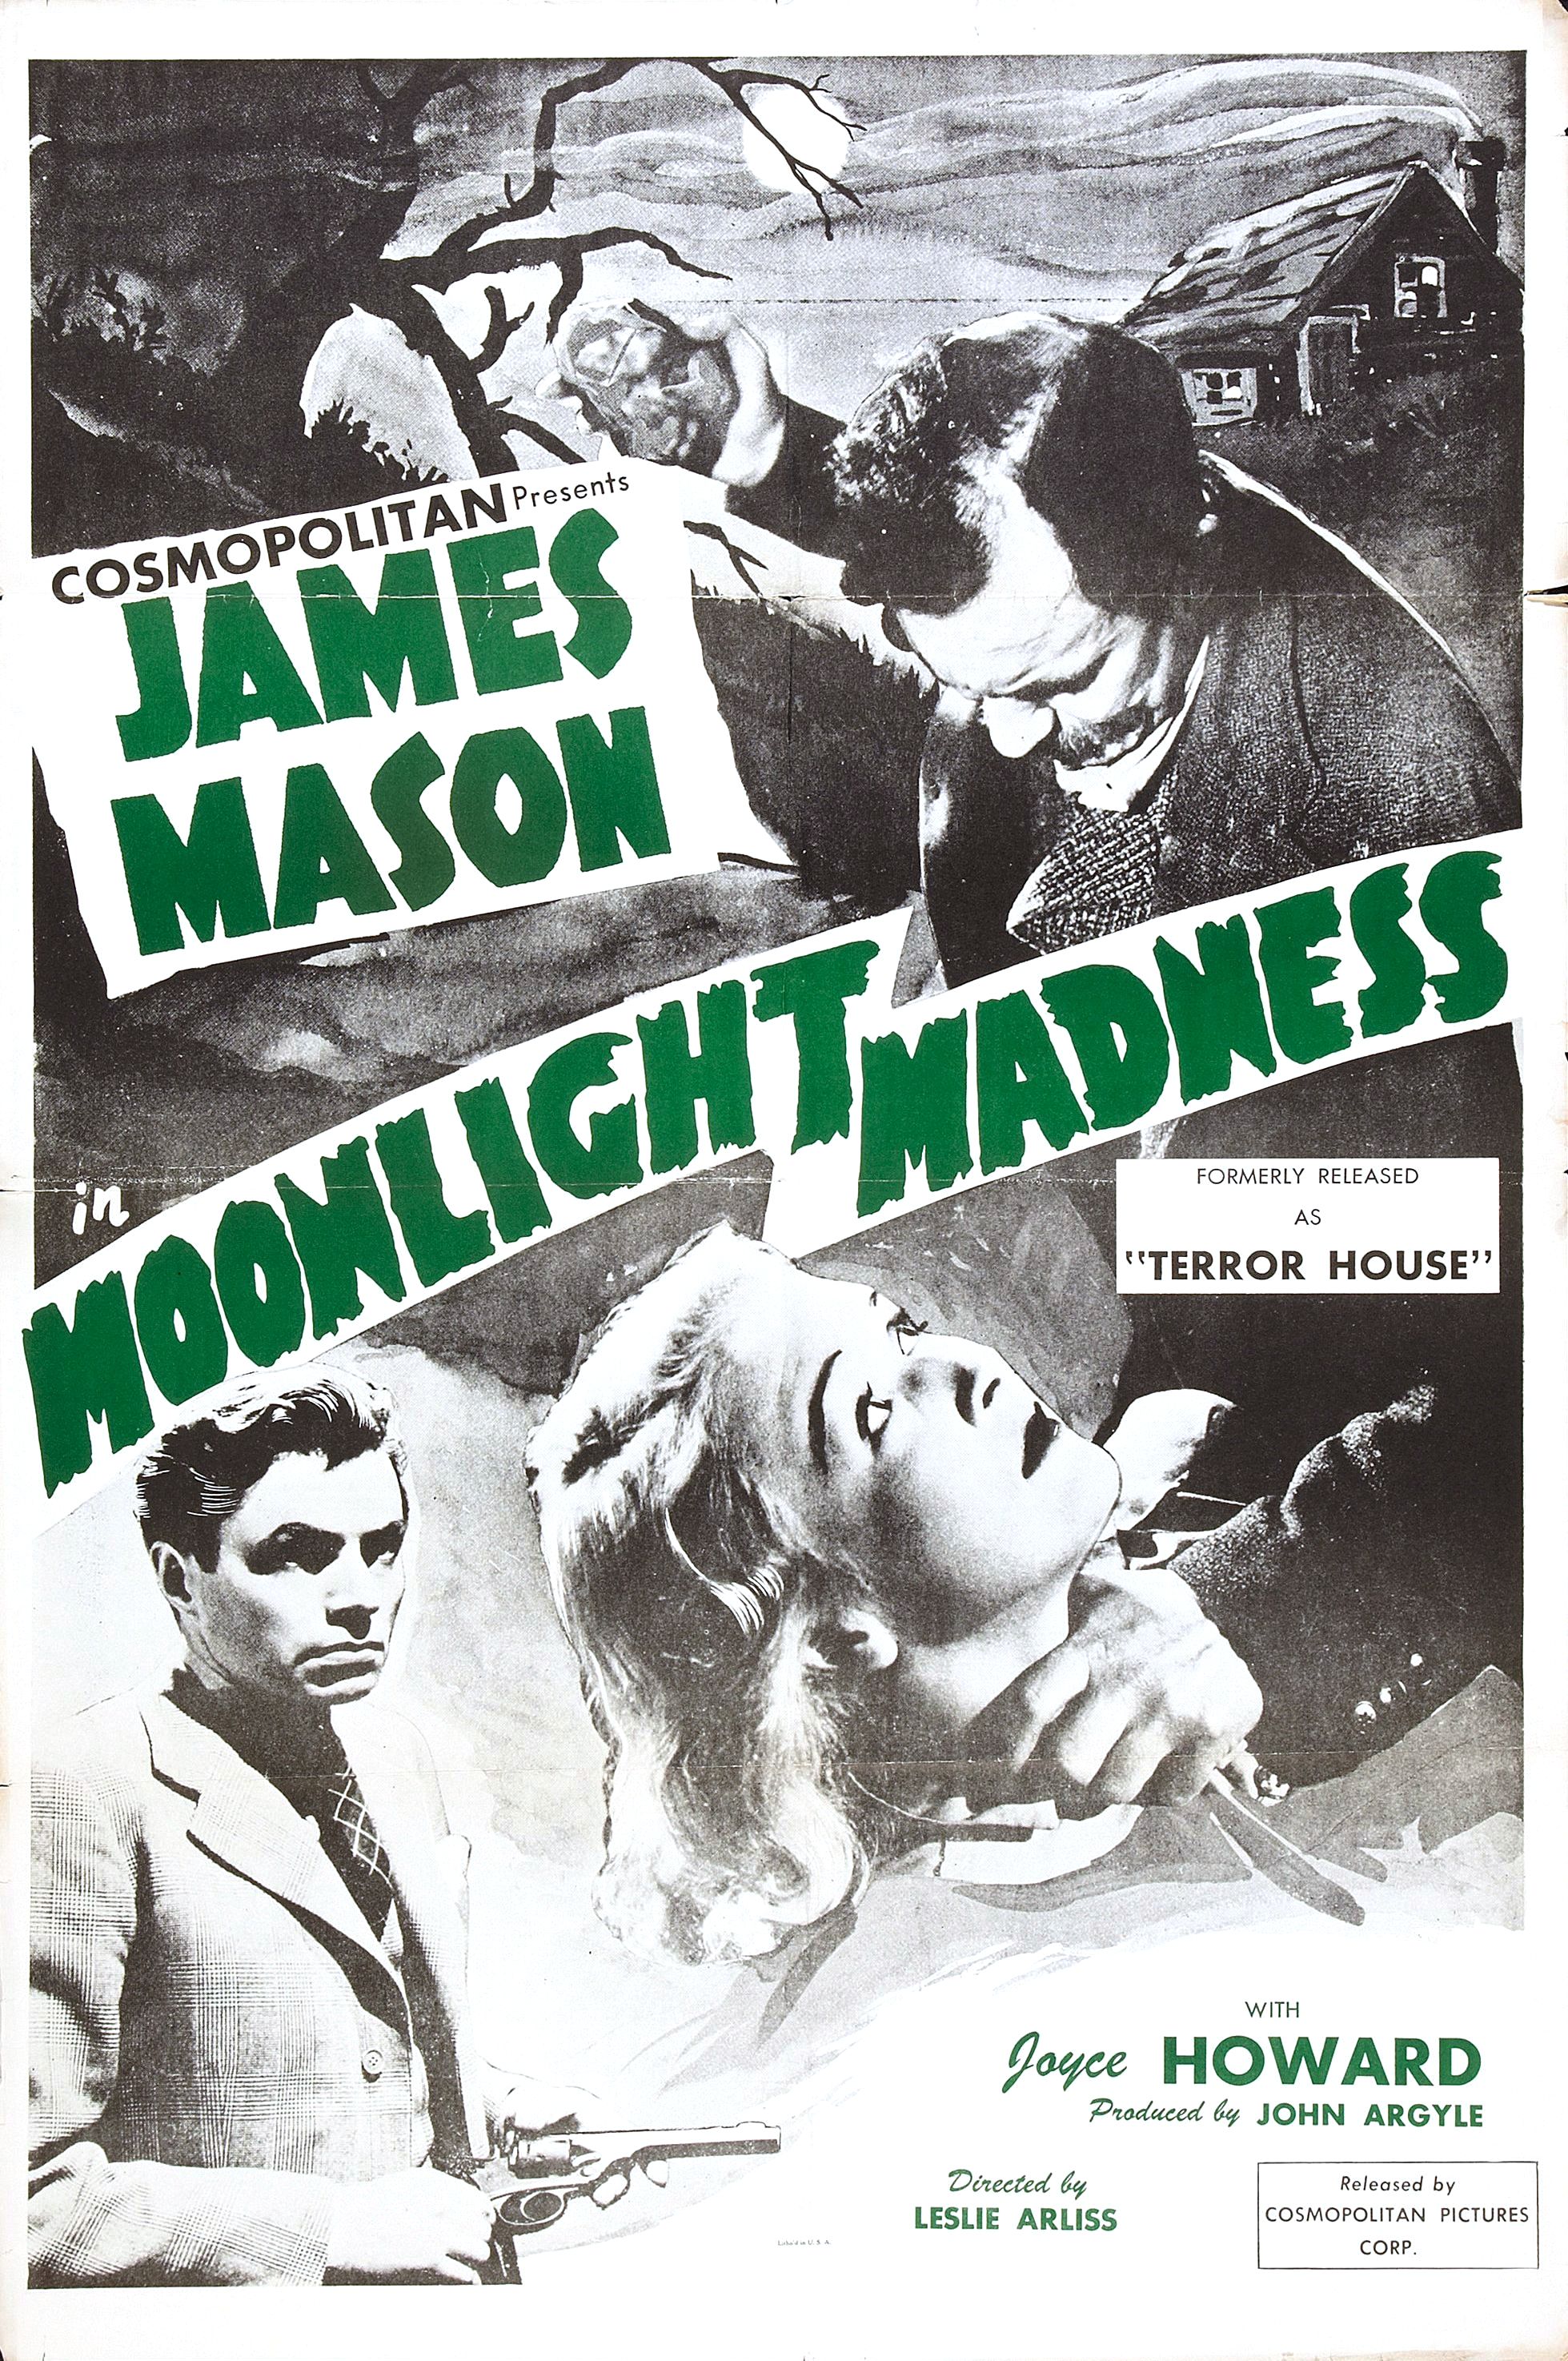 The Night Has Eyes (1942) starring James Mason on DVD on DVD